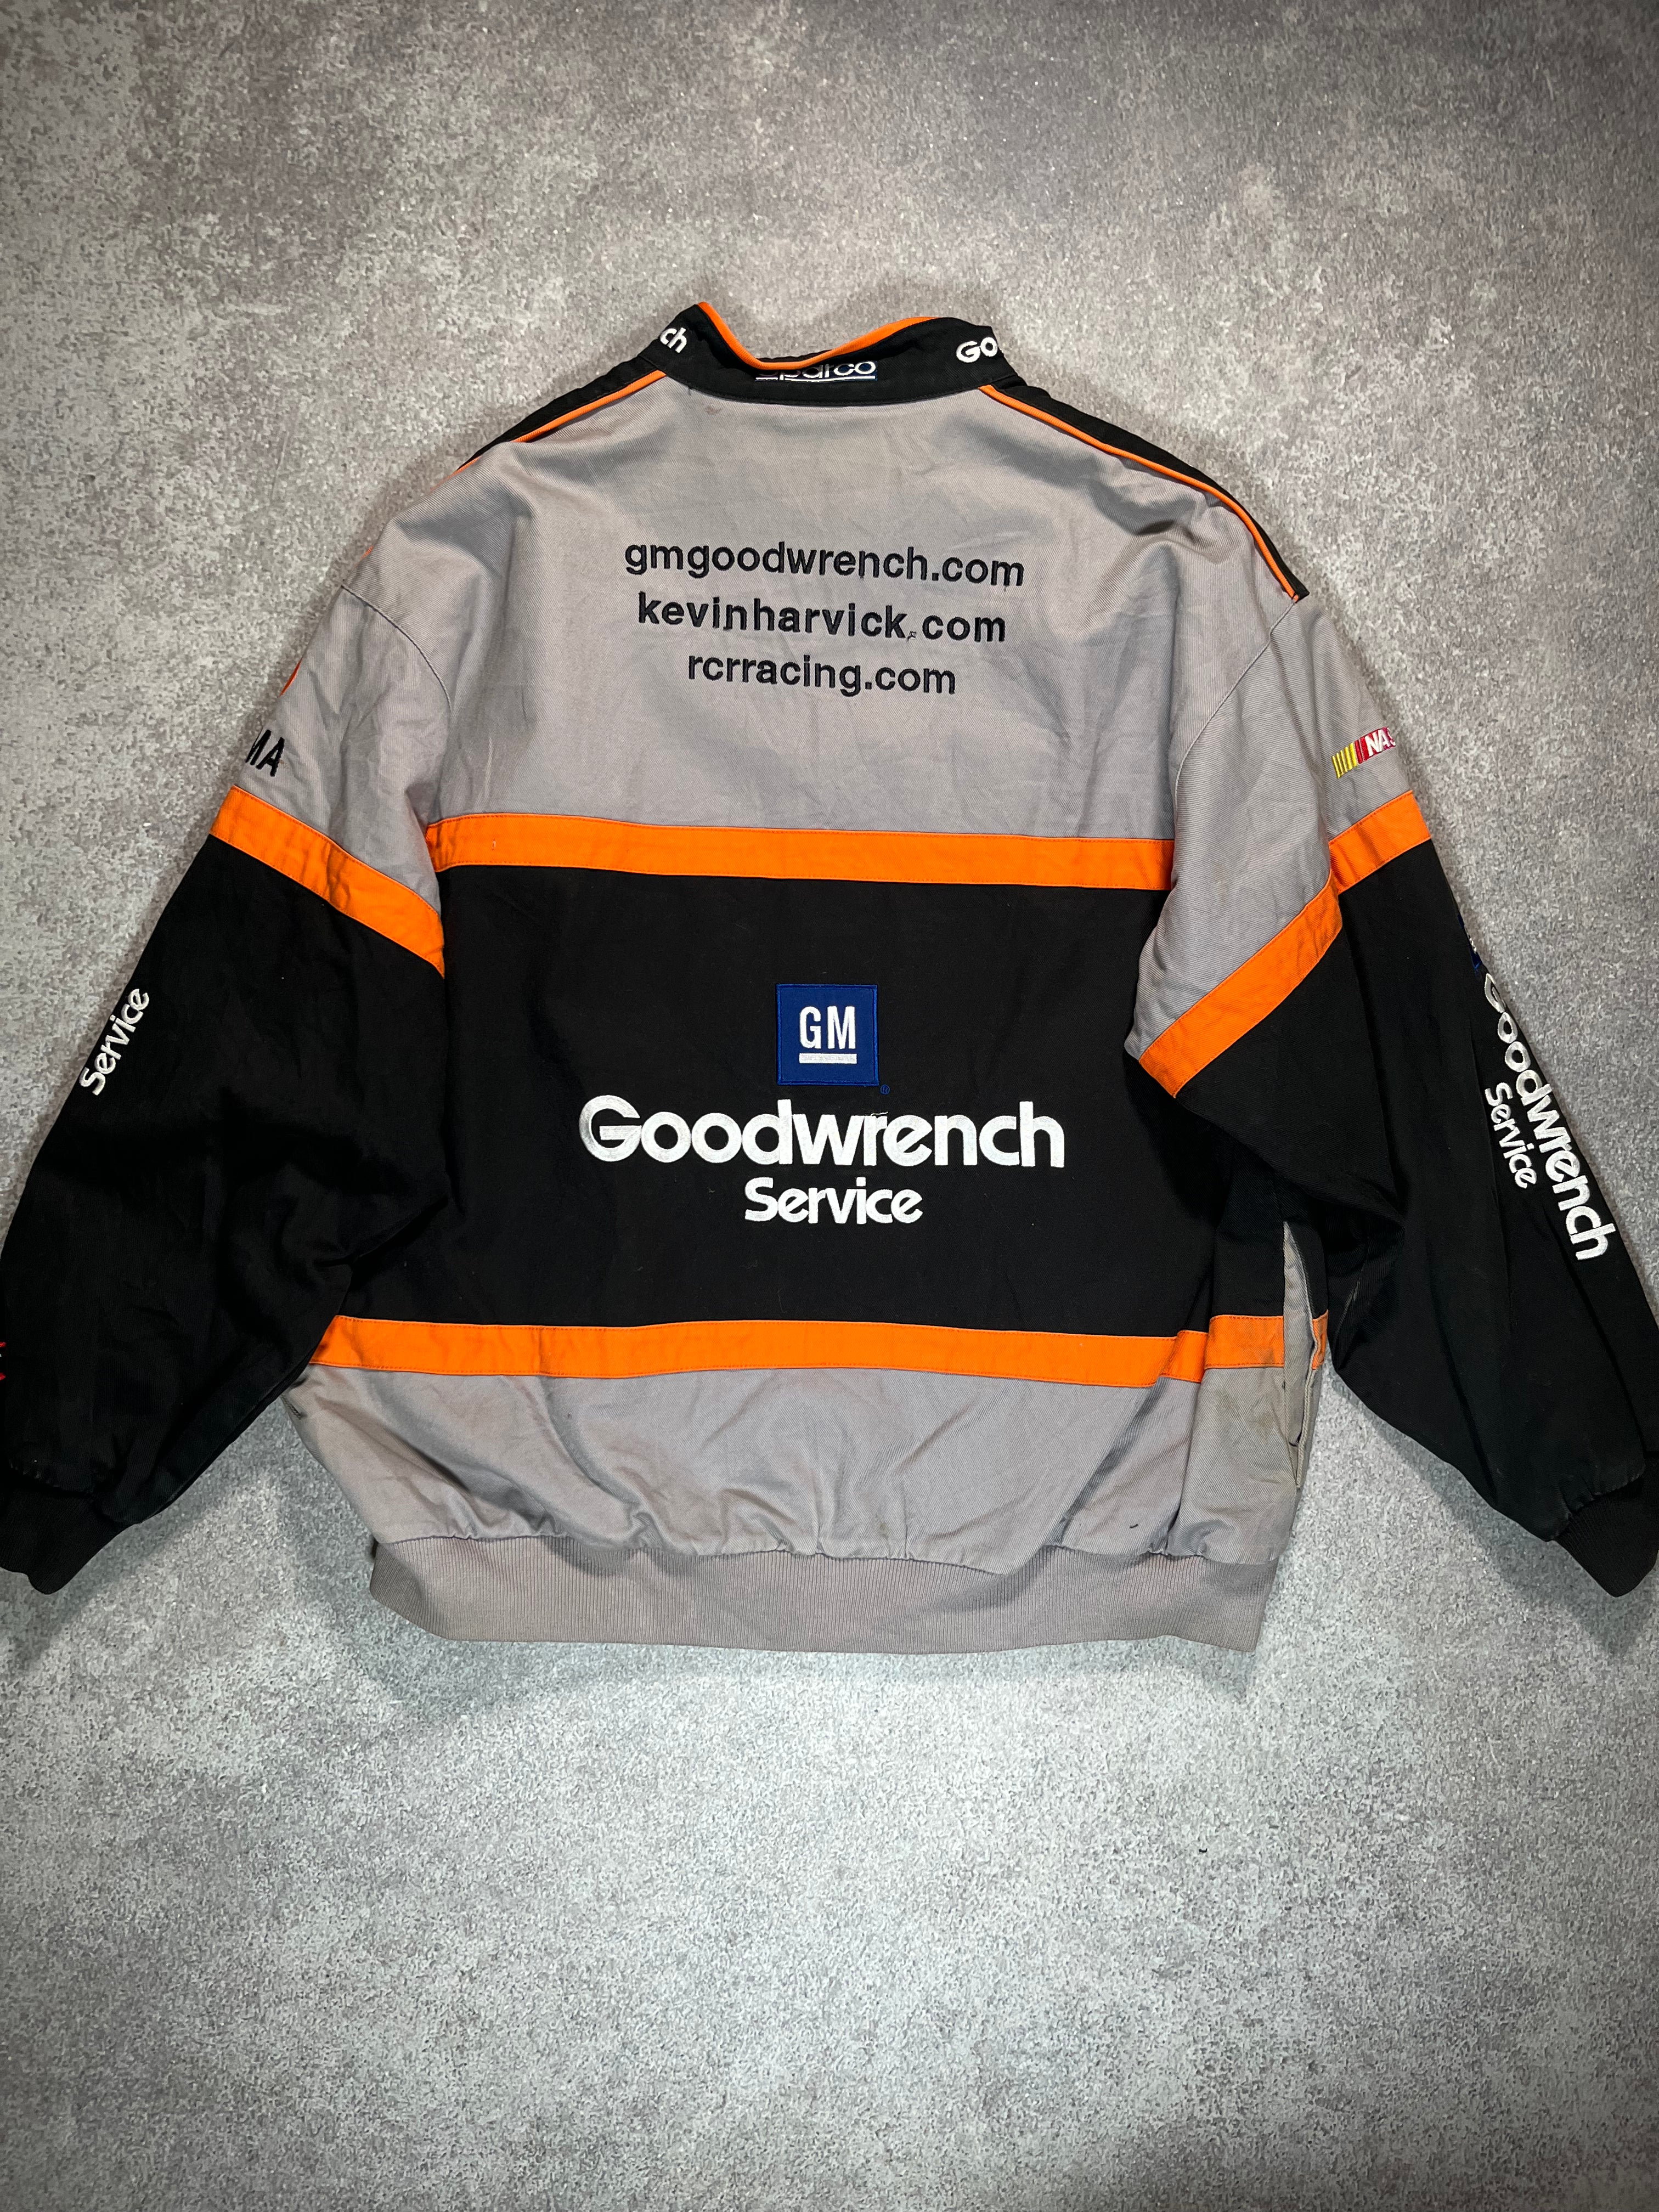 Racing Jacket Goodwrench Service Multicolor // Medium - RHAGHOUSE VINTAGE